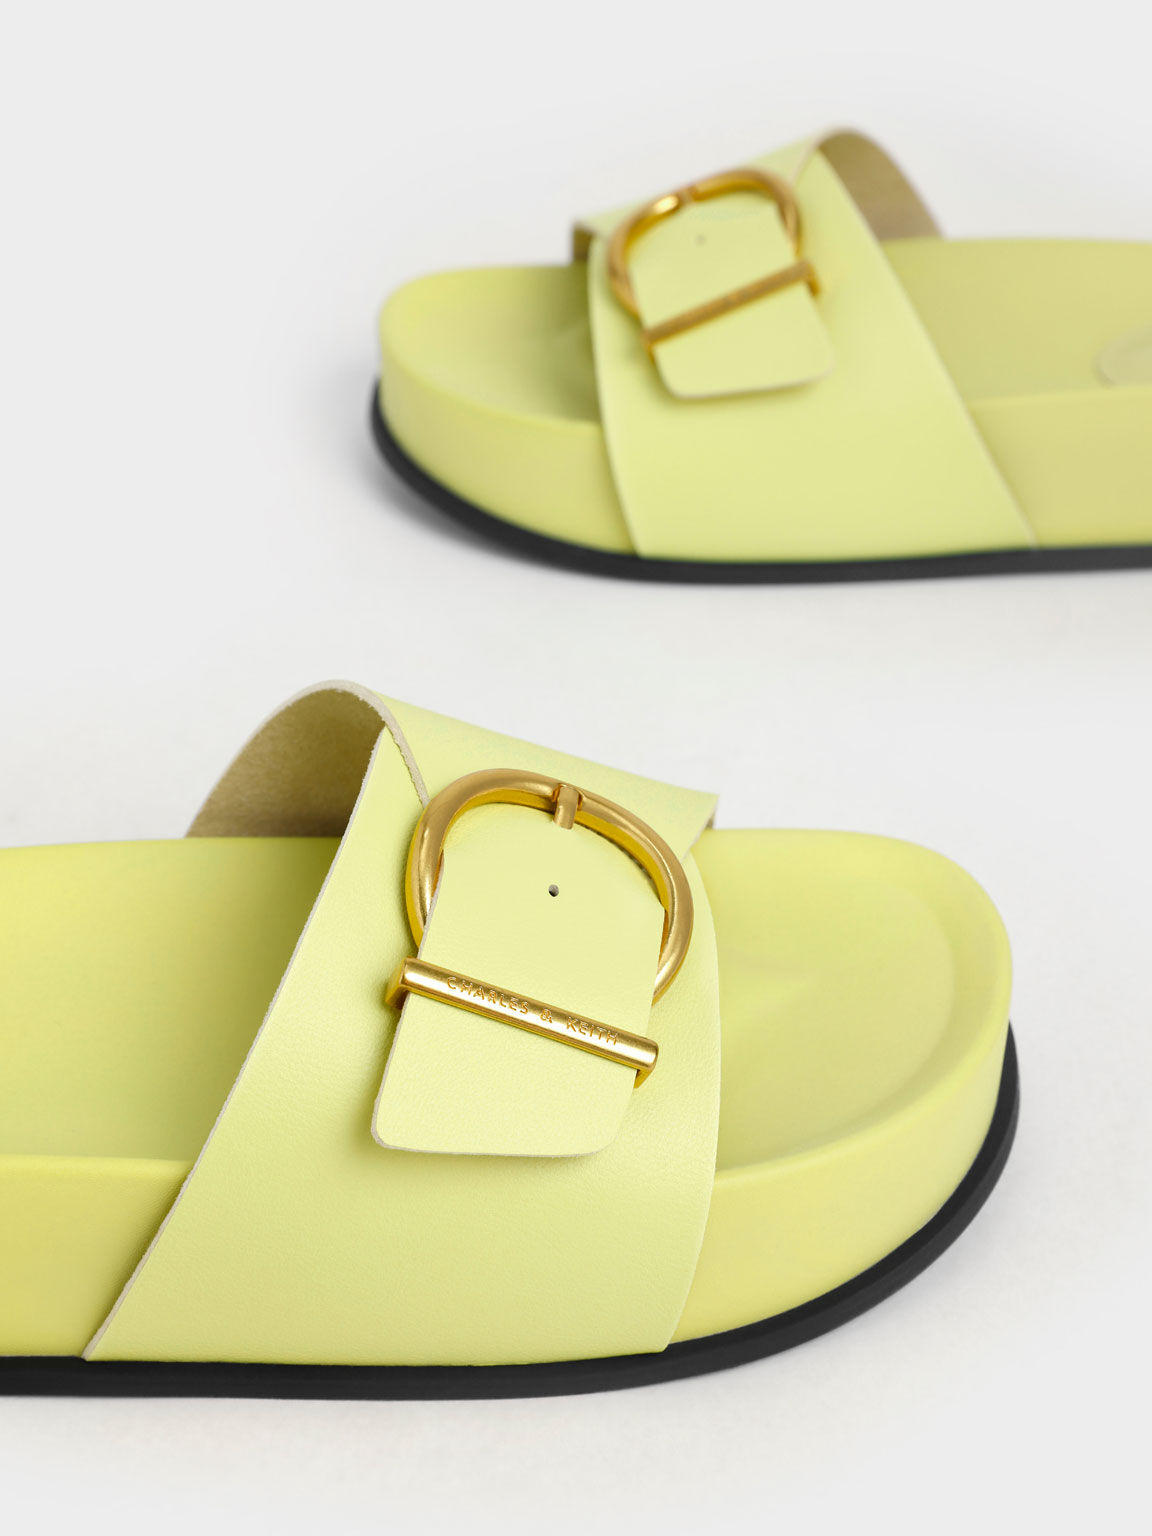 Sandal Flatform Metallic Buckle, Yellow, hi-res